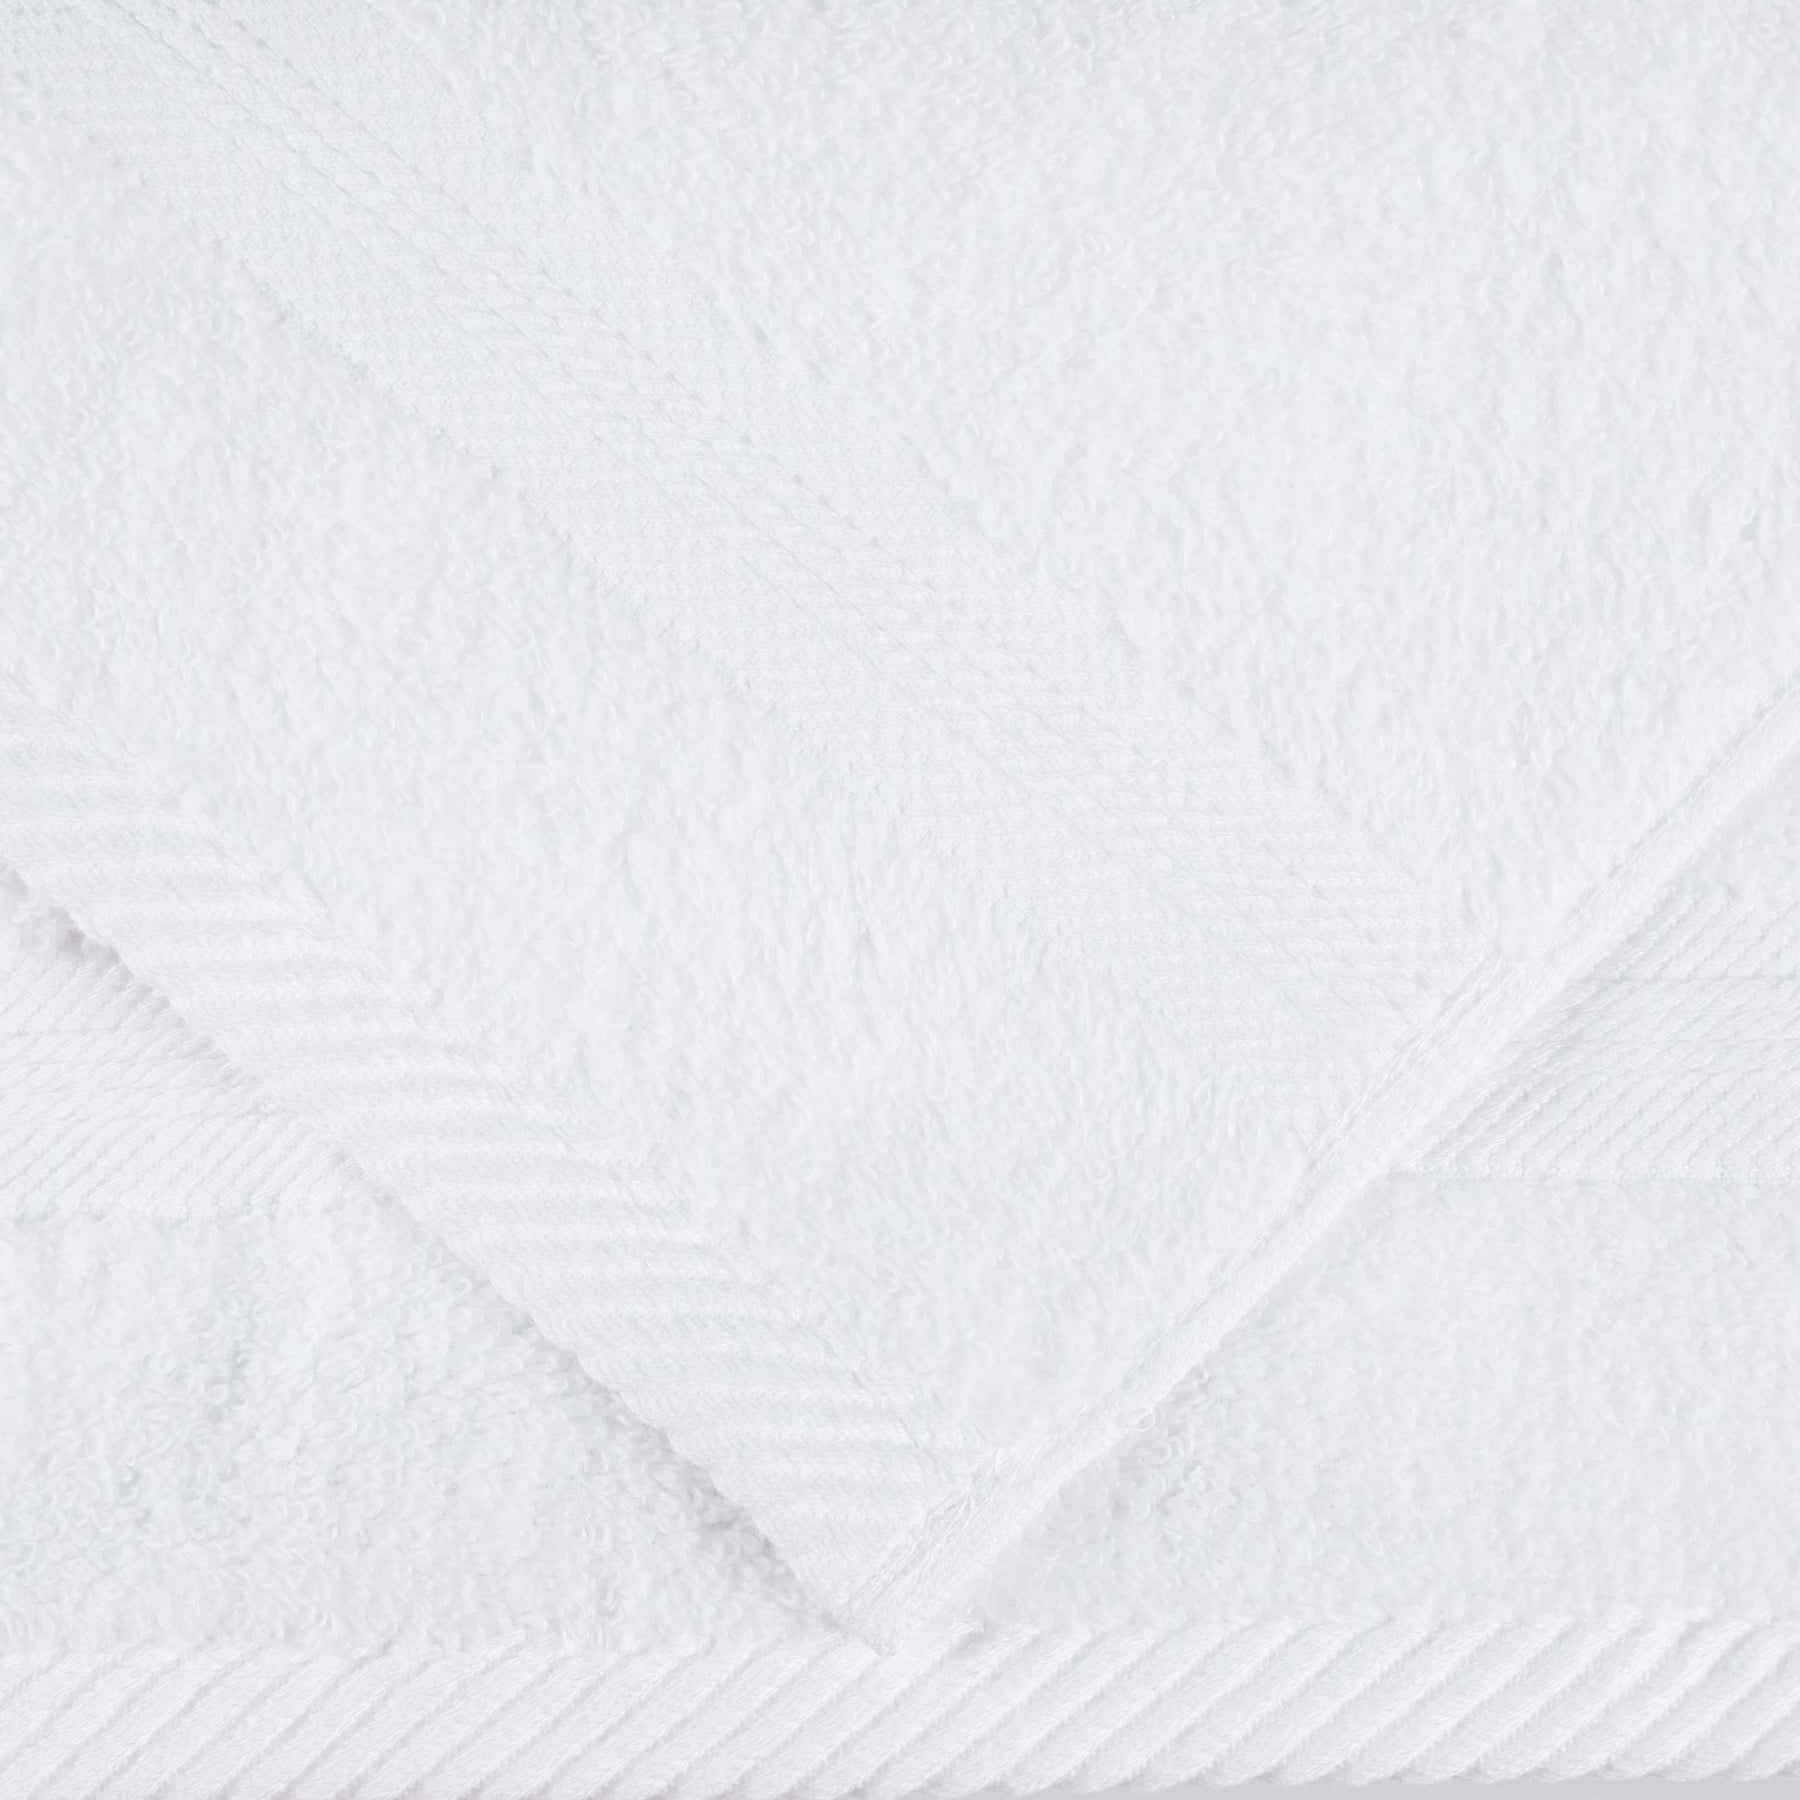 Smart Dry Zero Twist Cotton 3-Piece Assorted Towel Set - White